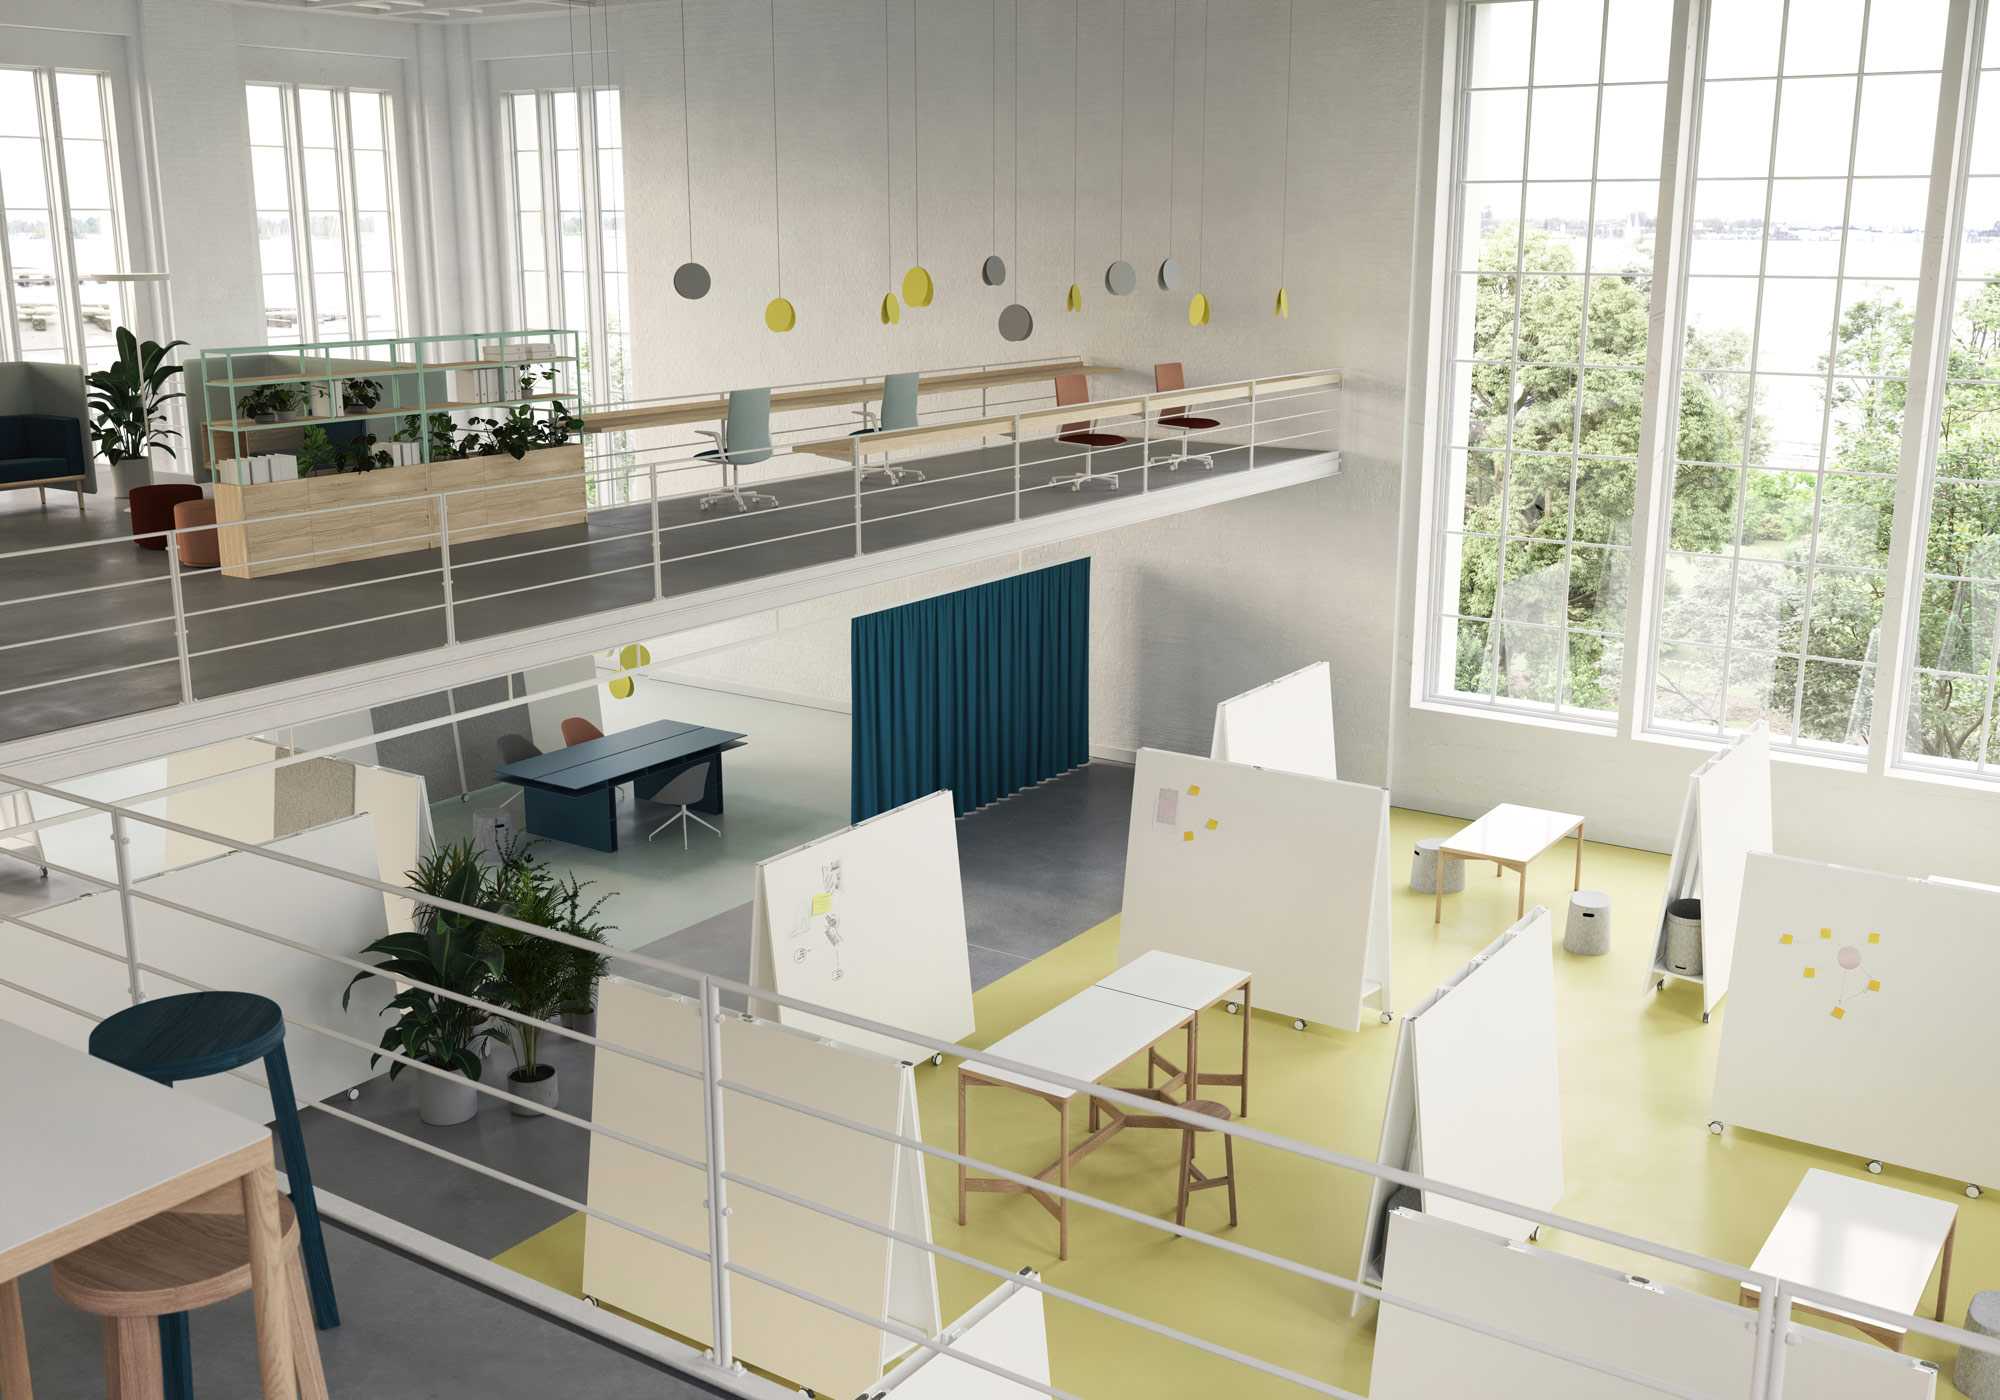 220802-moderner-innovationspace-offener-workshopspace-hocker-mit-moving-walls-whitebaords